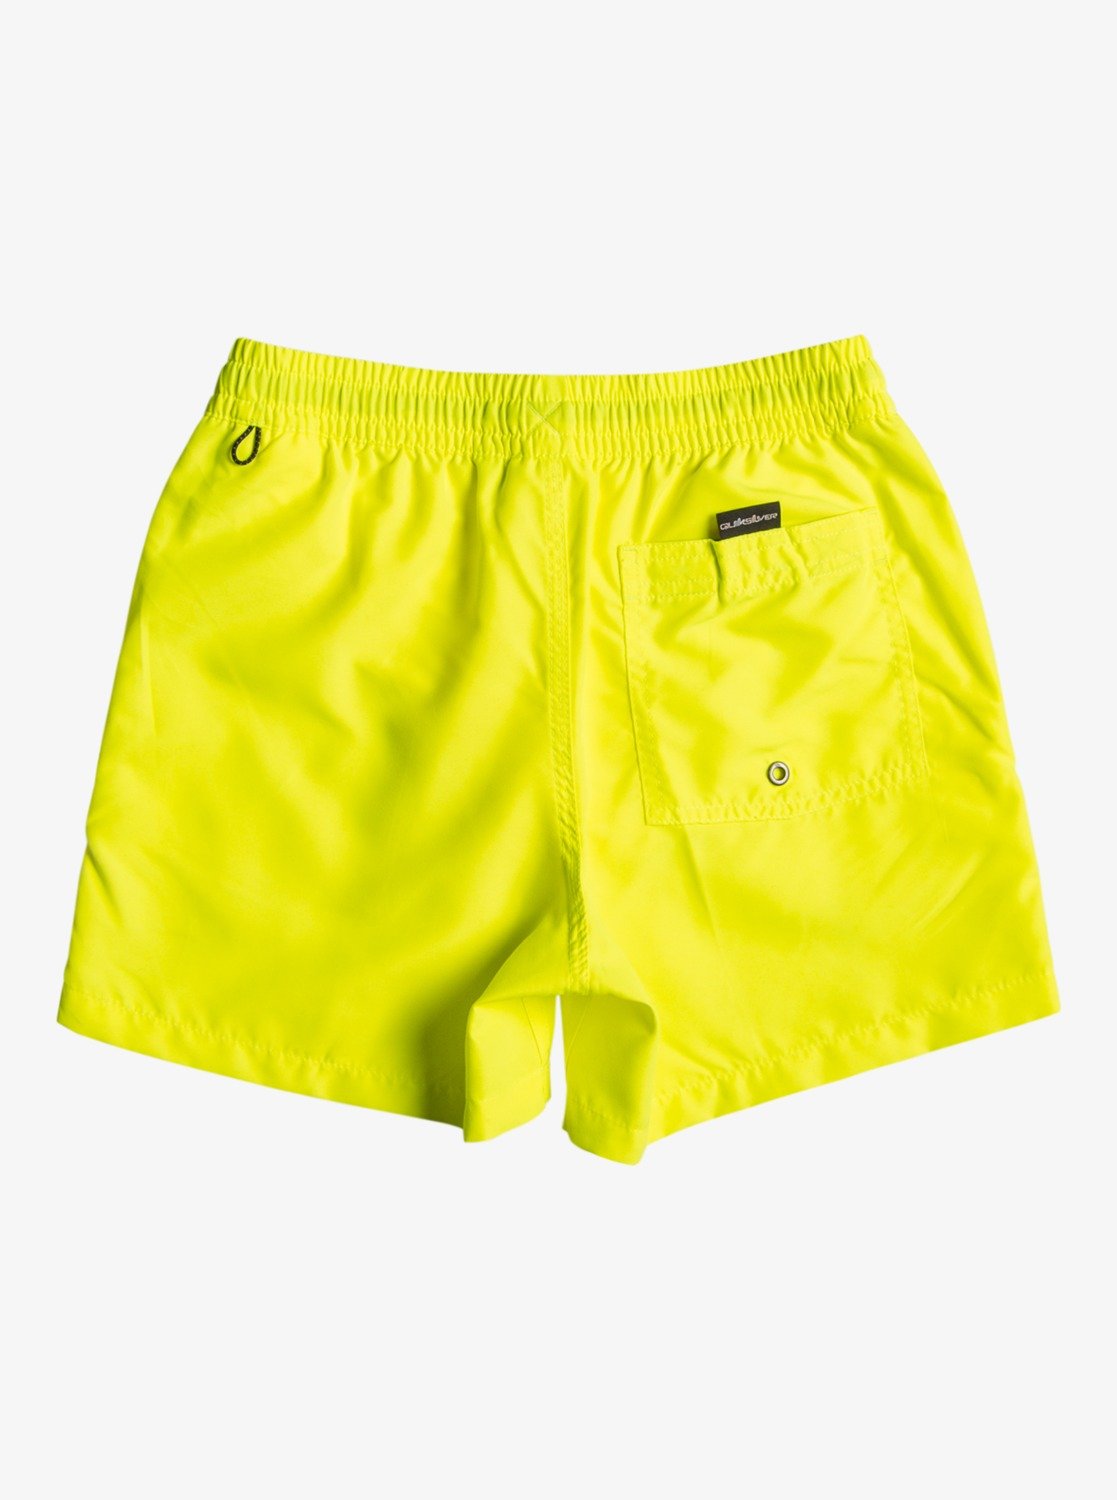 Quiksilver Everyday 13" Swim Shorts in Yellow